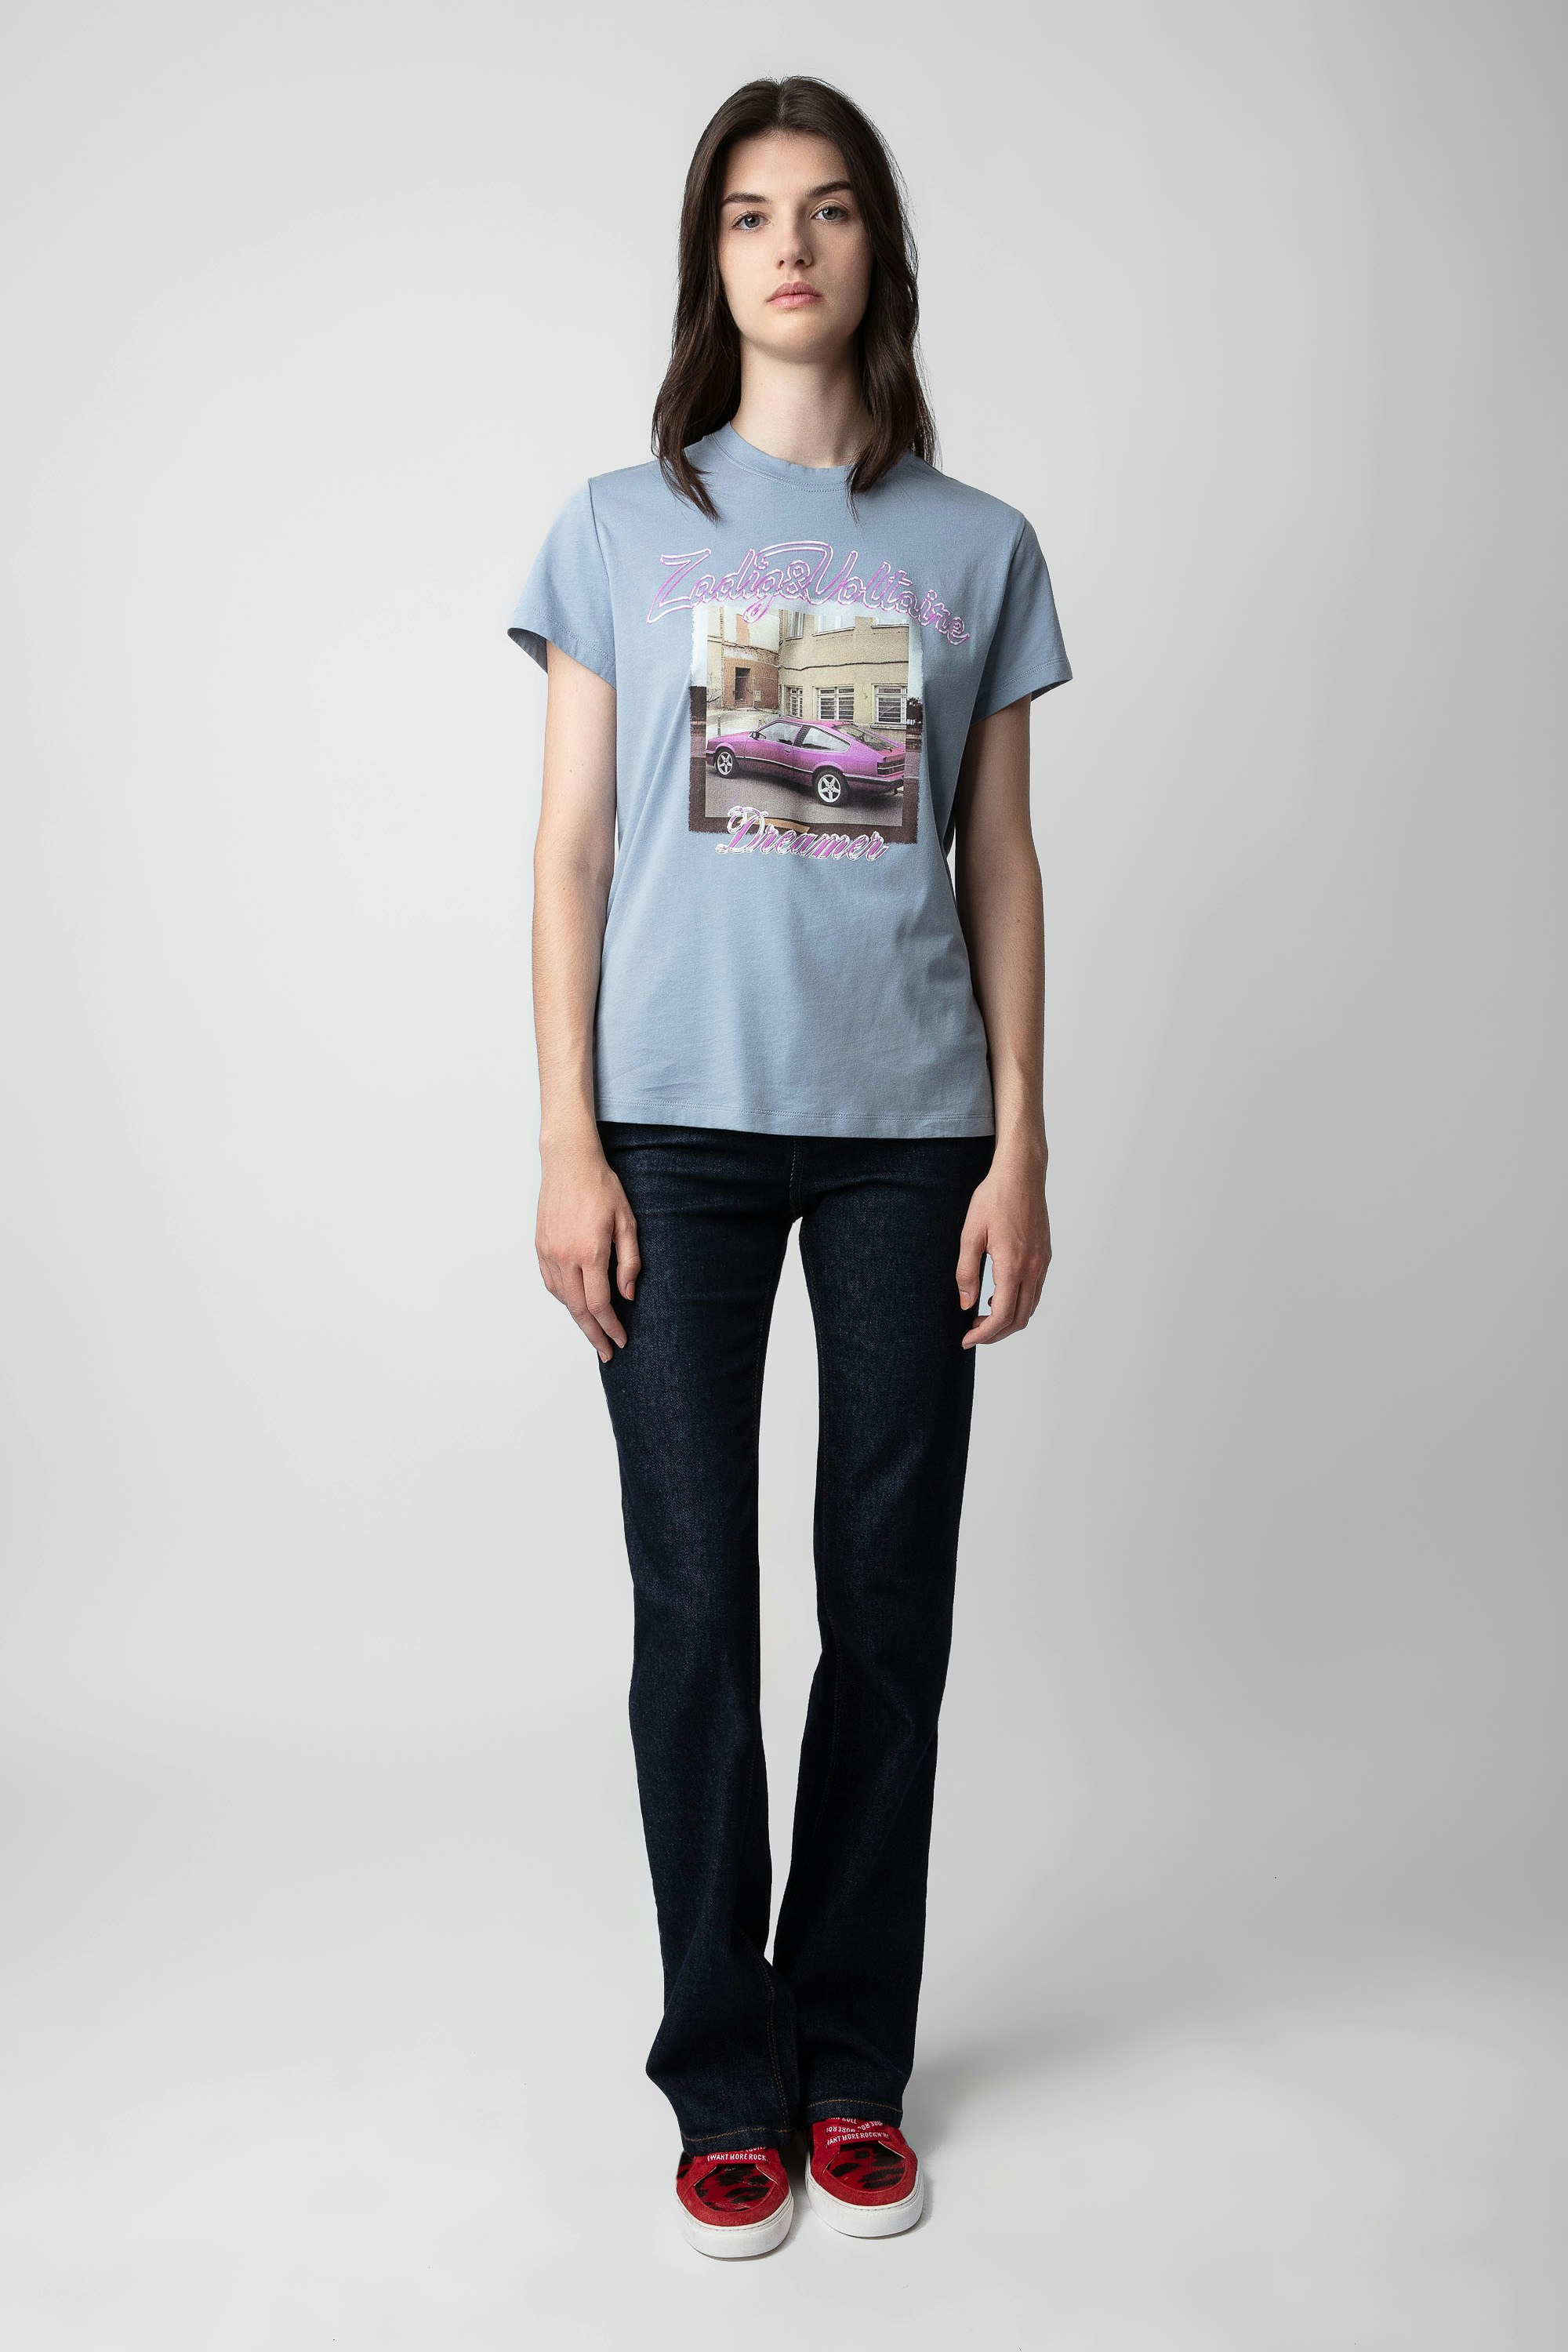 T-shirt Zoe Photoprint - T-shirt en coton bleu ciel orné d'un photoprint Pink Car.